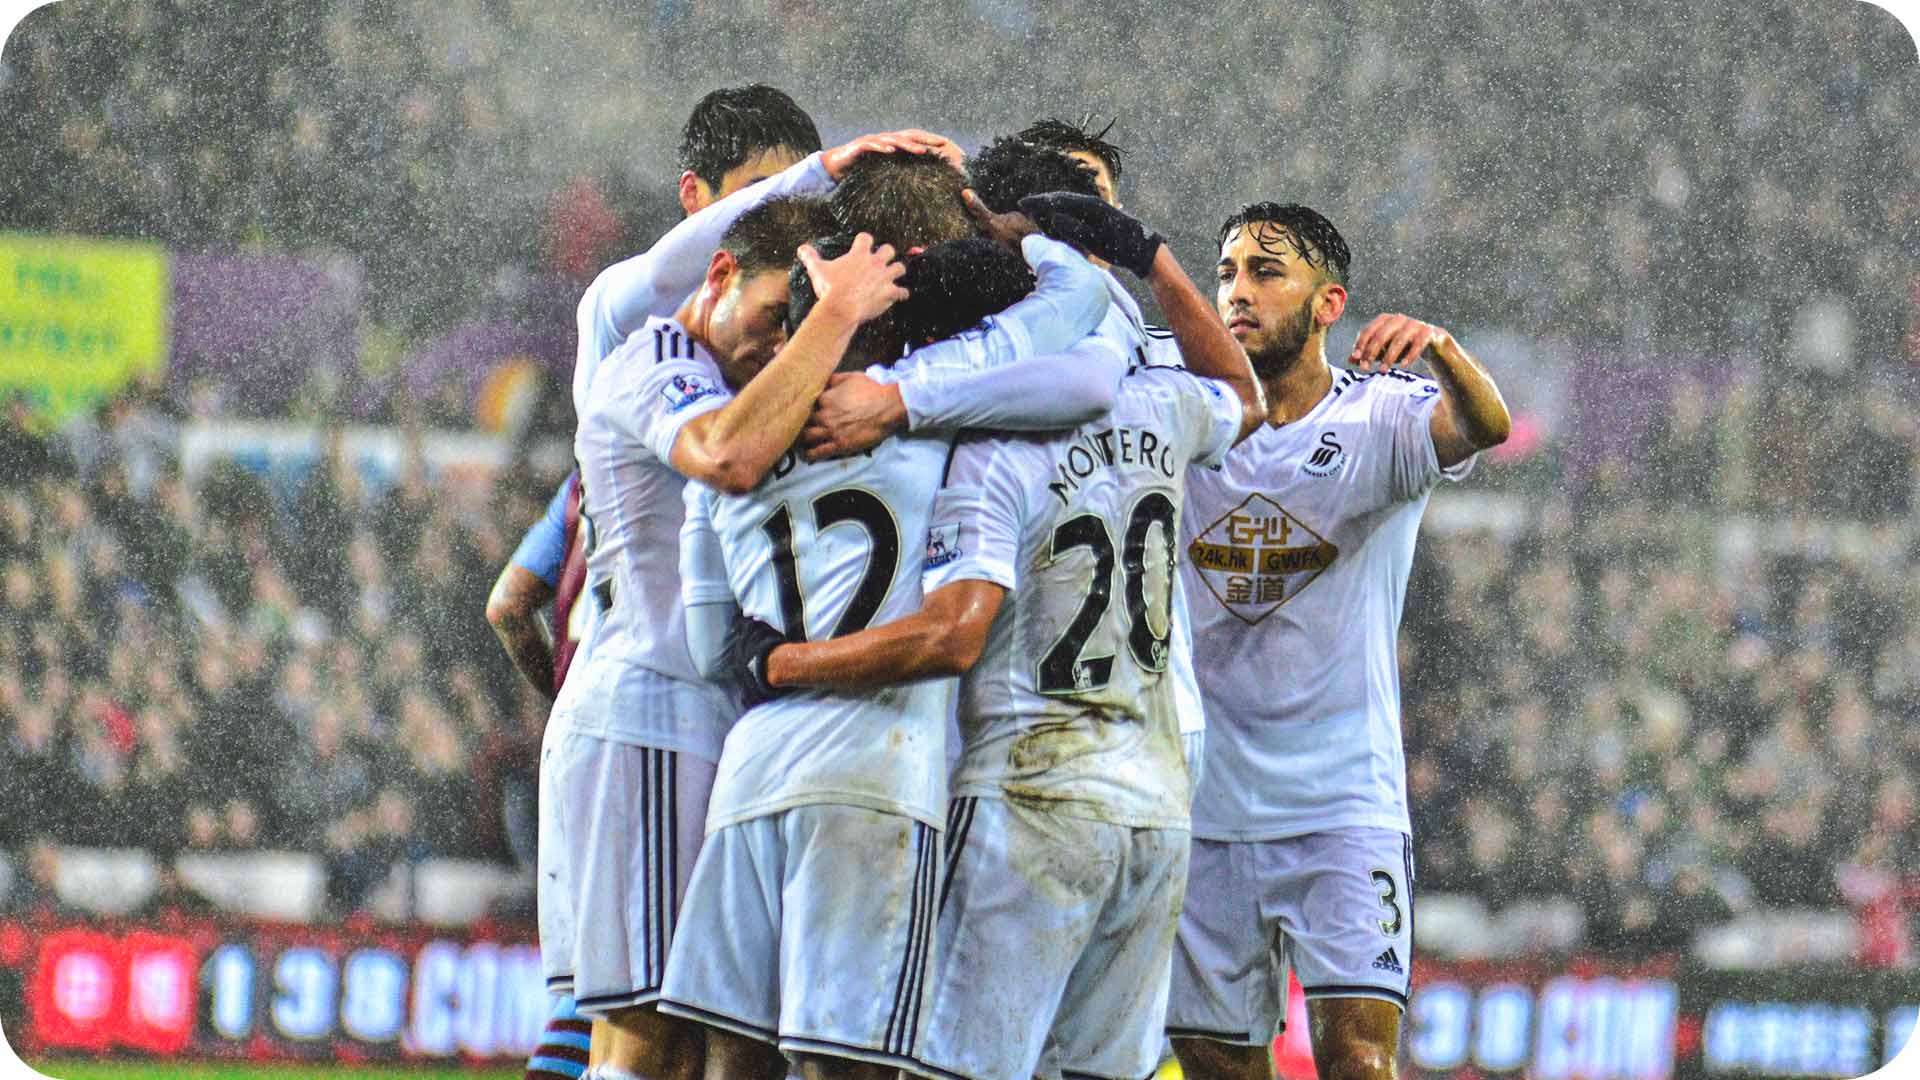 Photograph of the team celebrating scoring against Arsenal